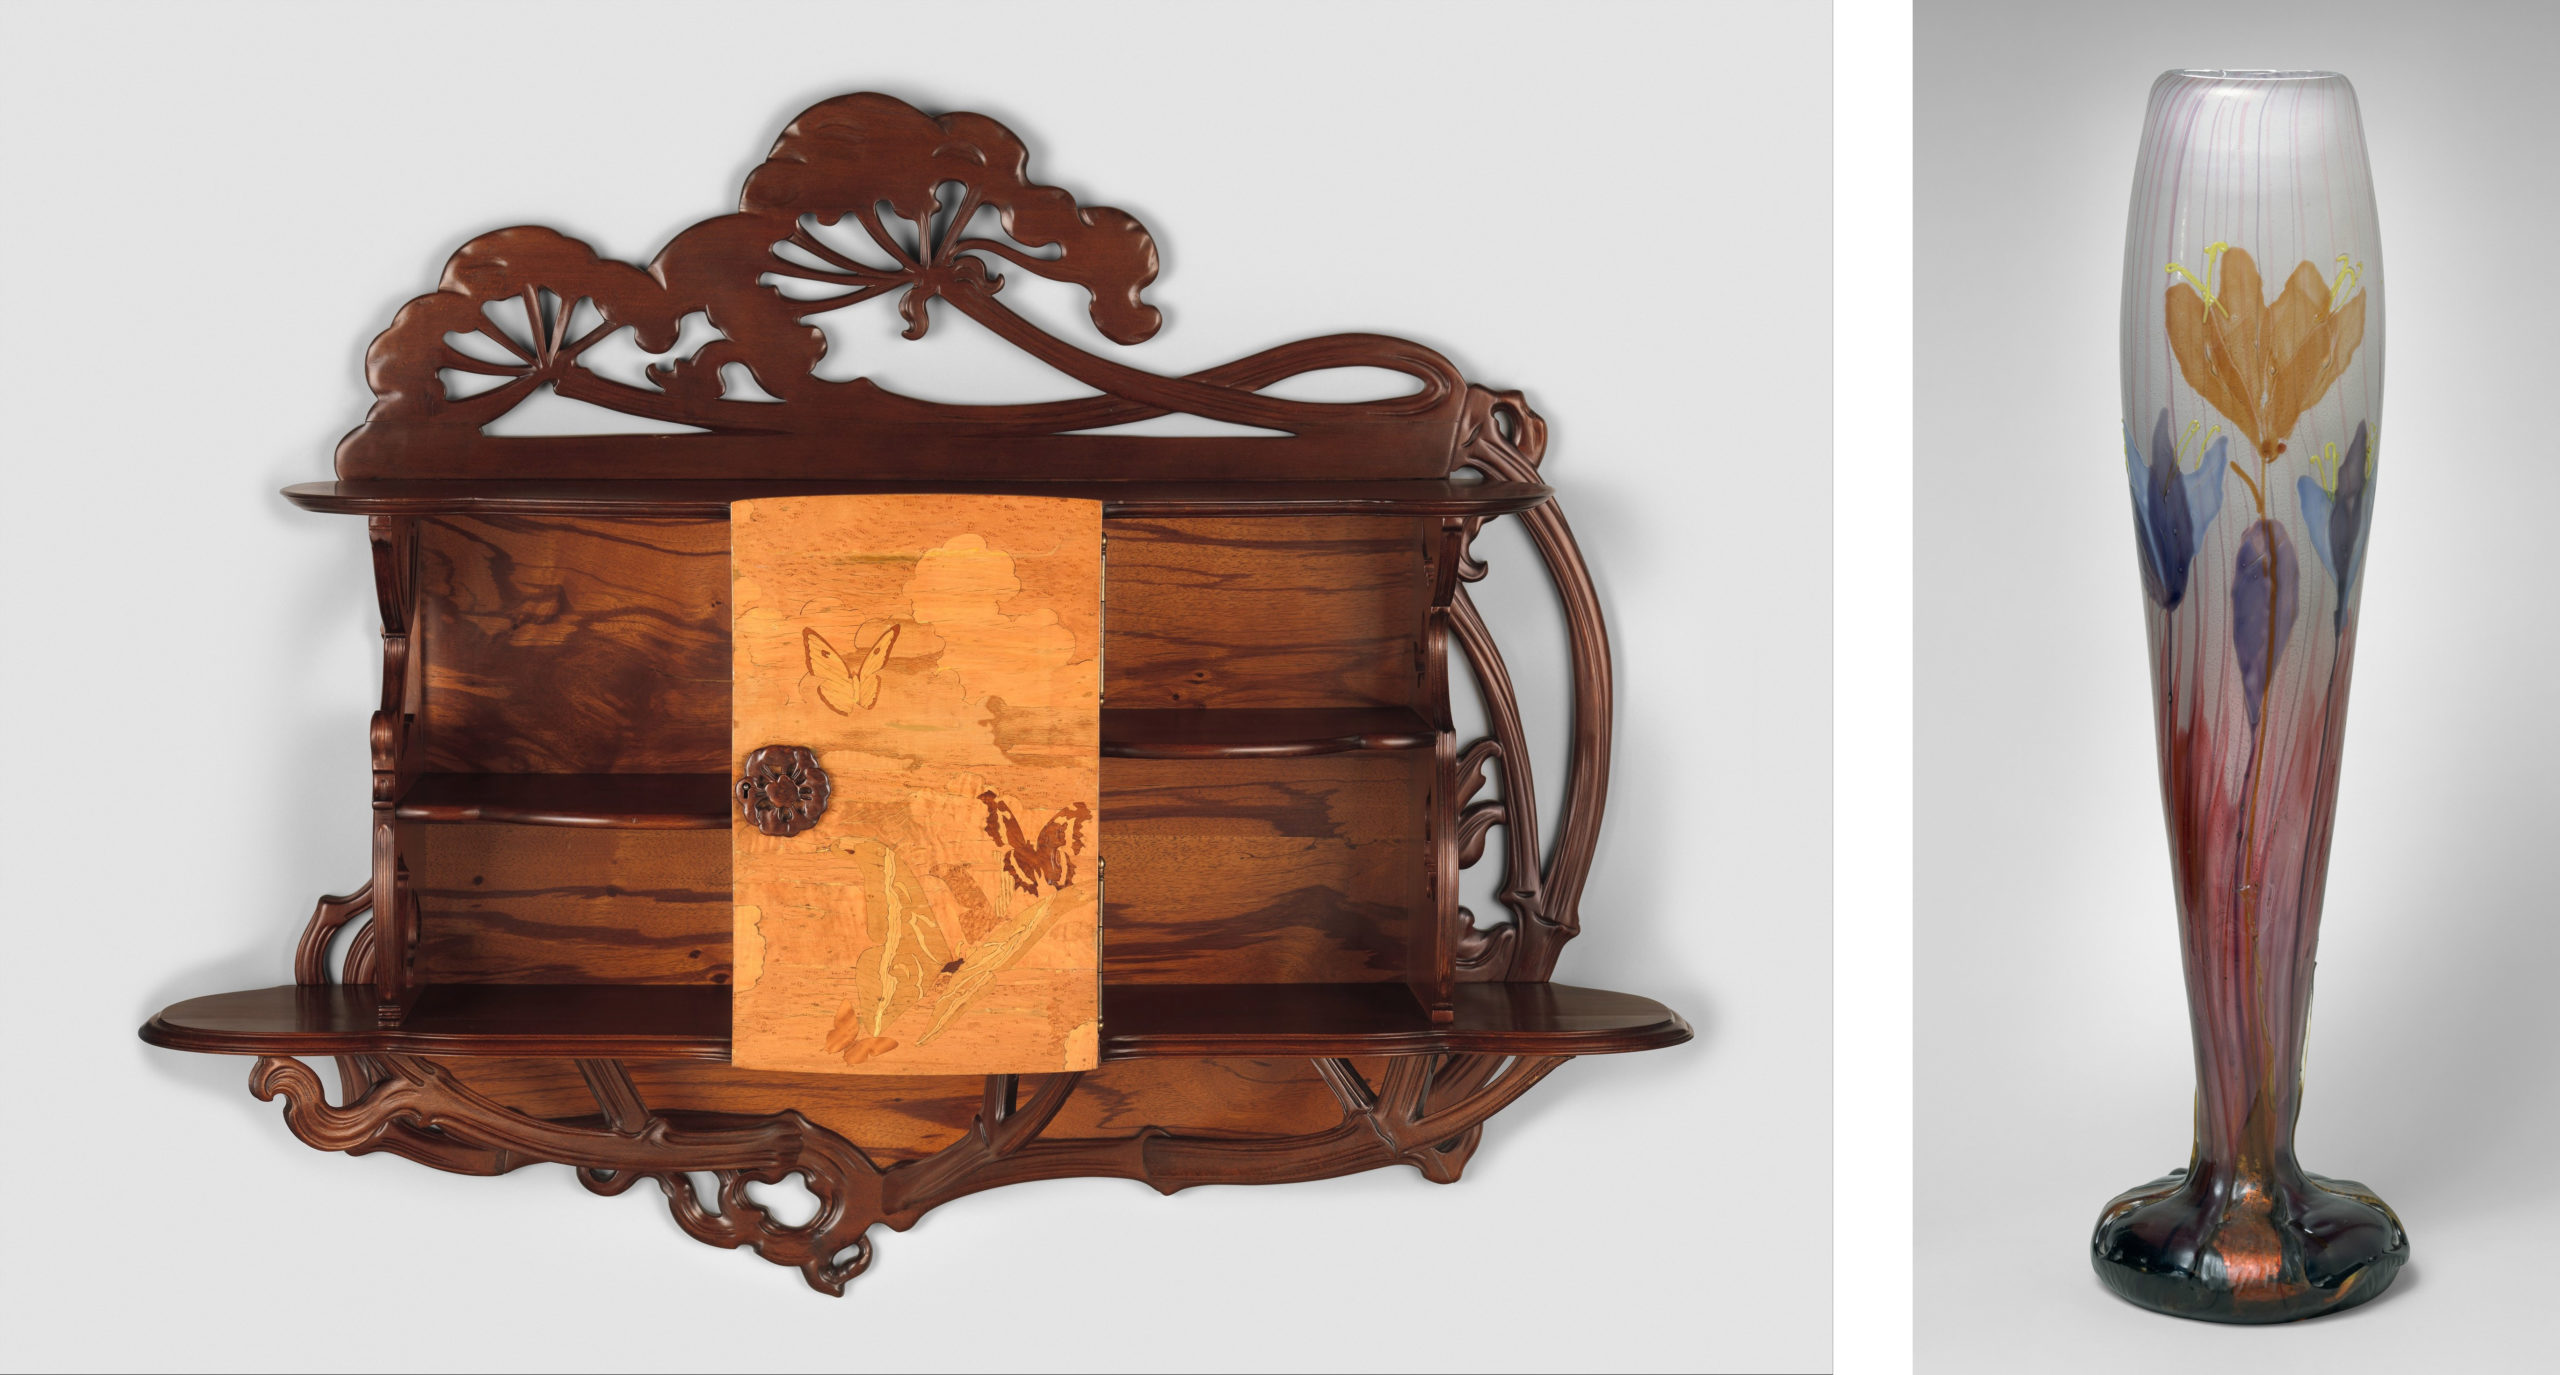 Left: Emile Gallé, “Ombellifères” Cabinet, c. 1900, various woods, 40 x 49 ½ x 12 inches (The Metropolitan Museum of Art, New York); Right: Emile Gallé, Autumn Crocus Vase, c. 1900, glass, 17 3/8 x 3 ¾ inches (The Metropolitan Museum of Art, New York)